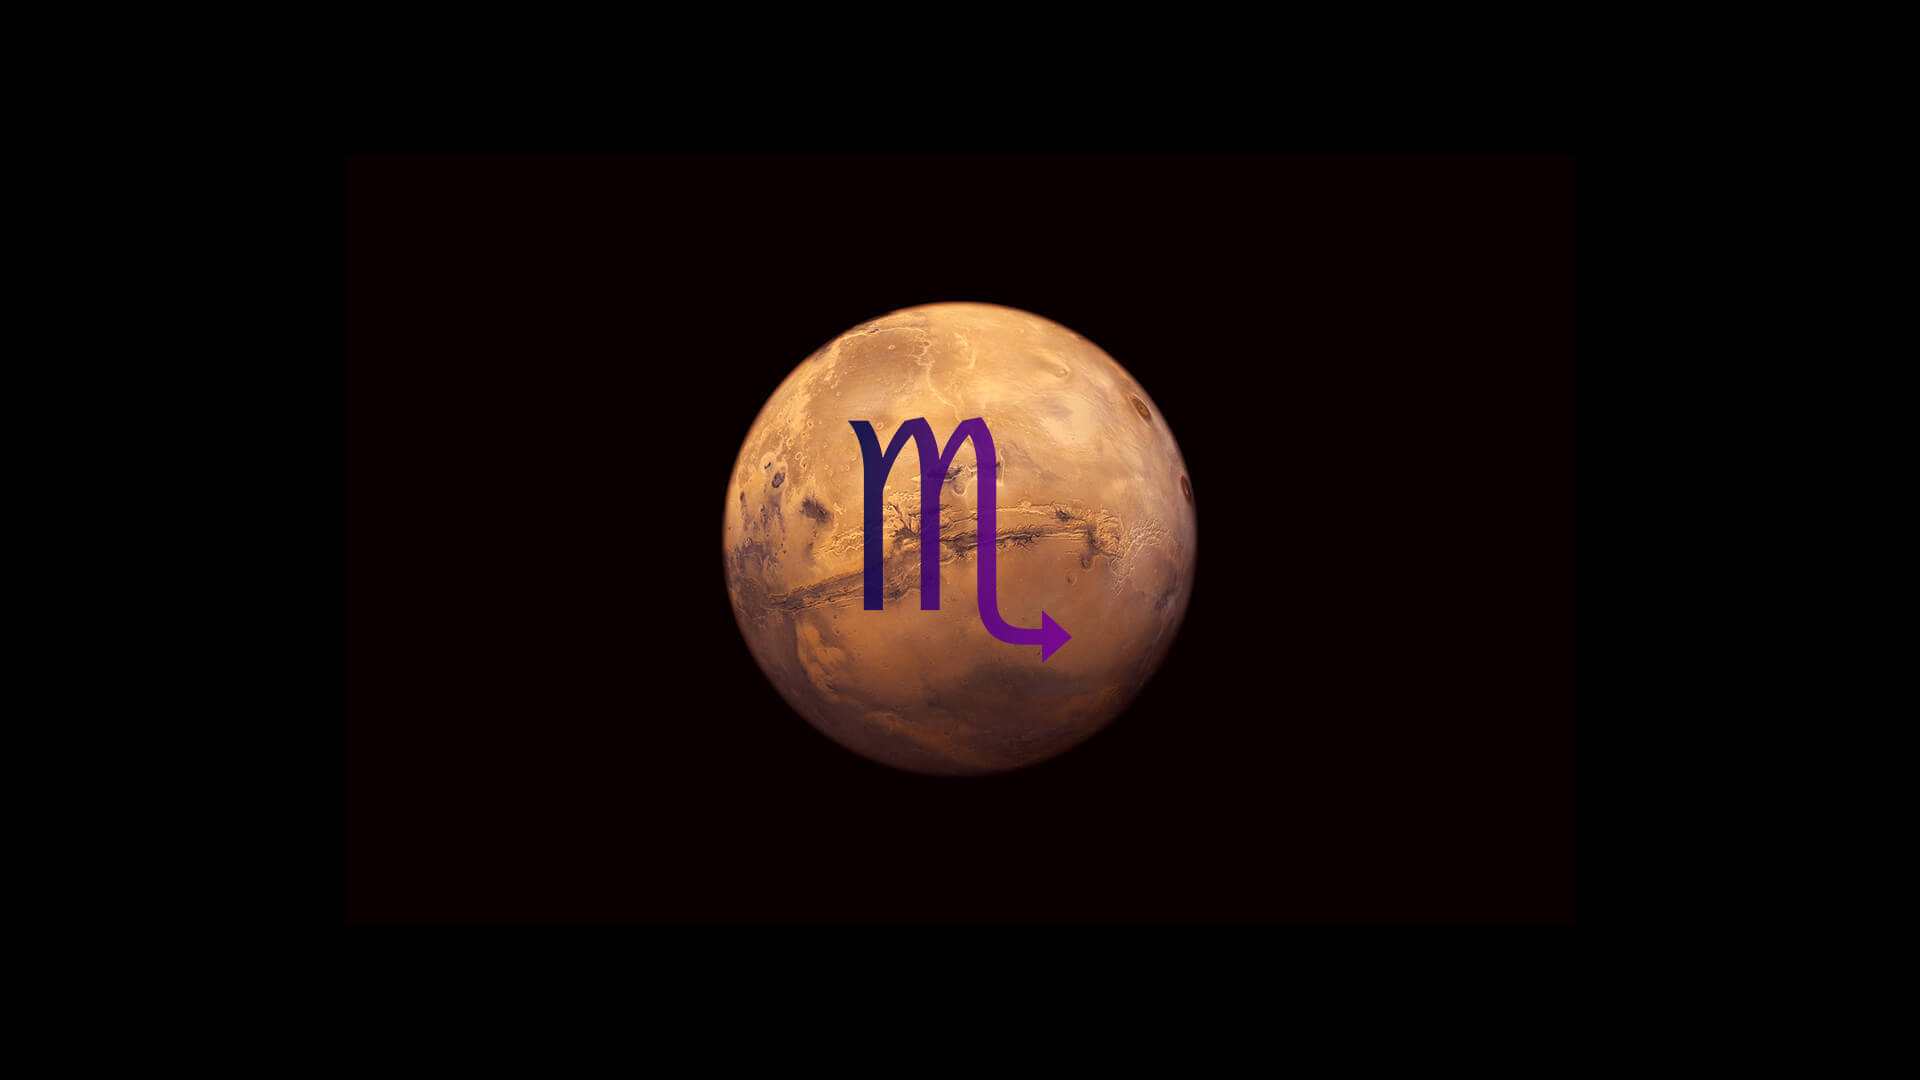 Mars in Scorpio: Deep Soul Searching